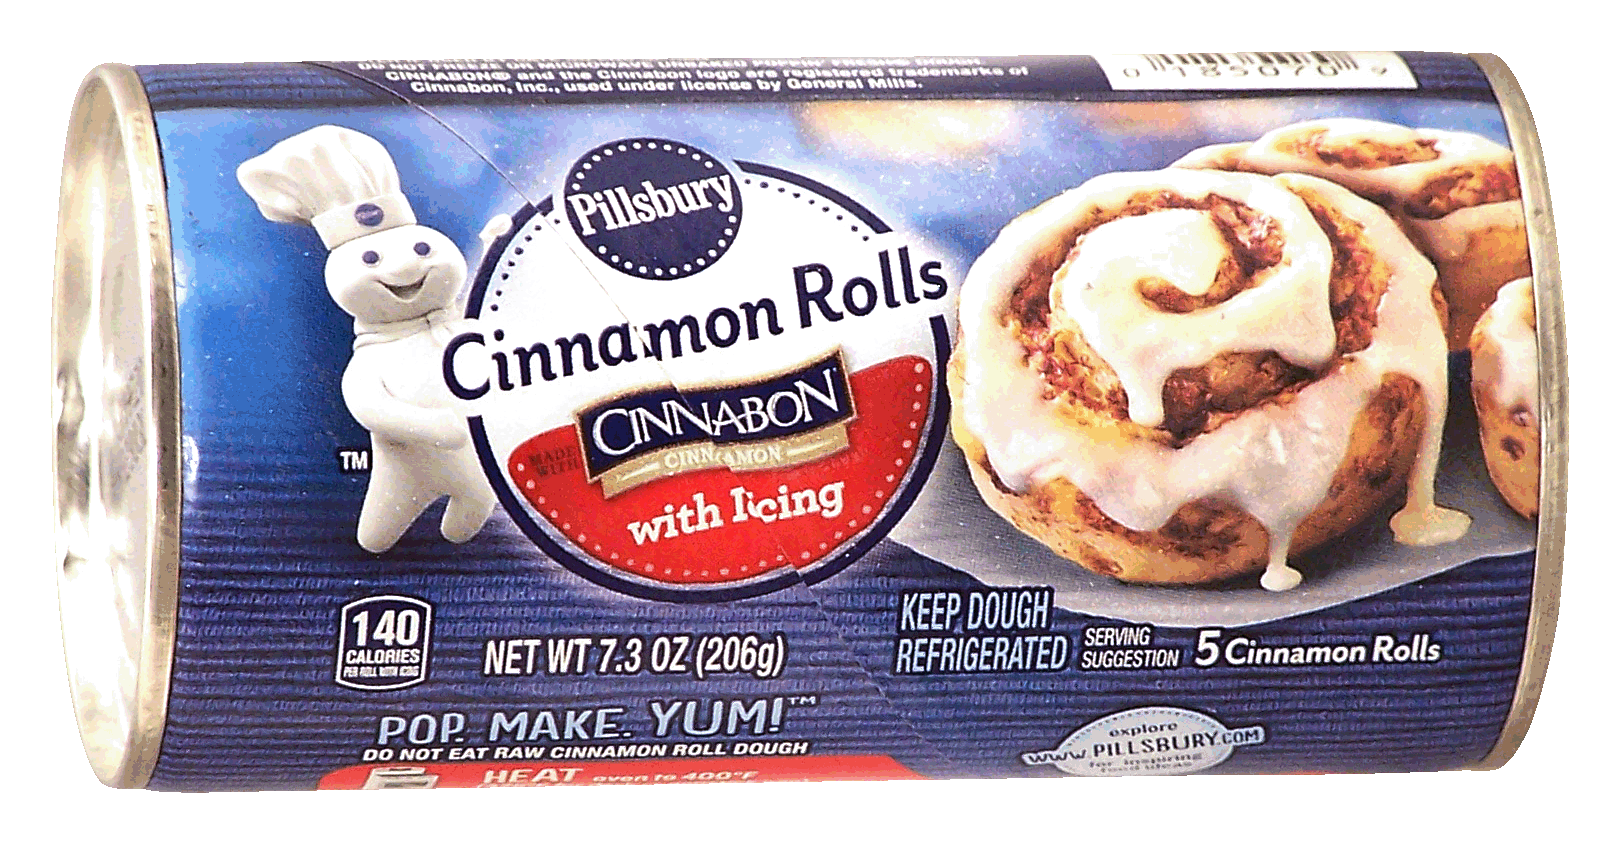 Pillsbury Cinnamon Rolls 5 cinnamon rolls made with cinnabon cinnamon, with icing Full-Size Picture